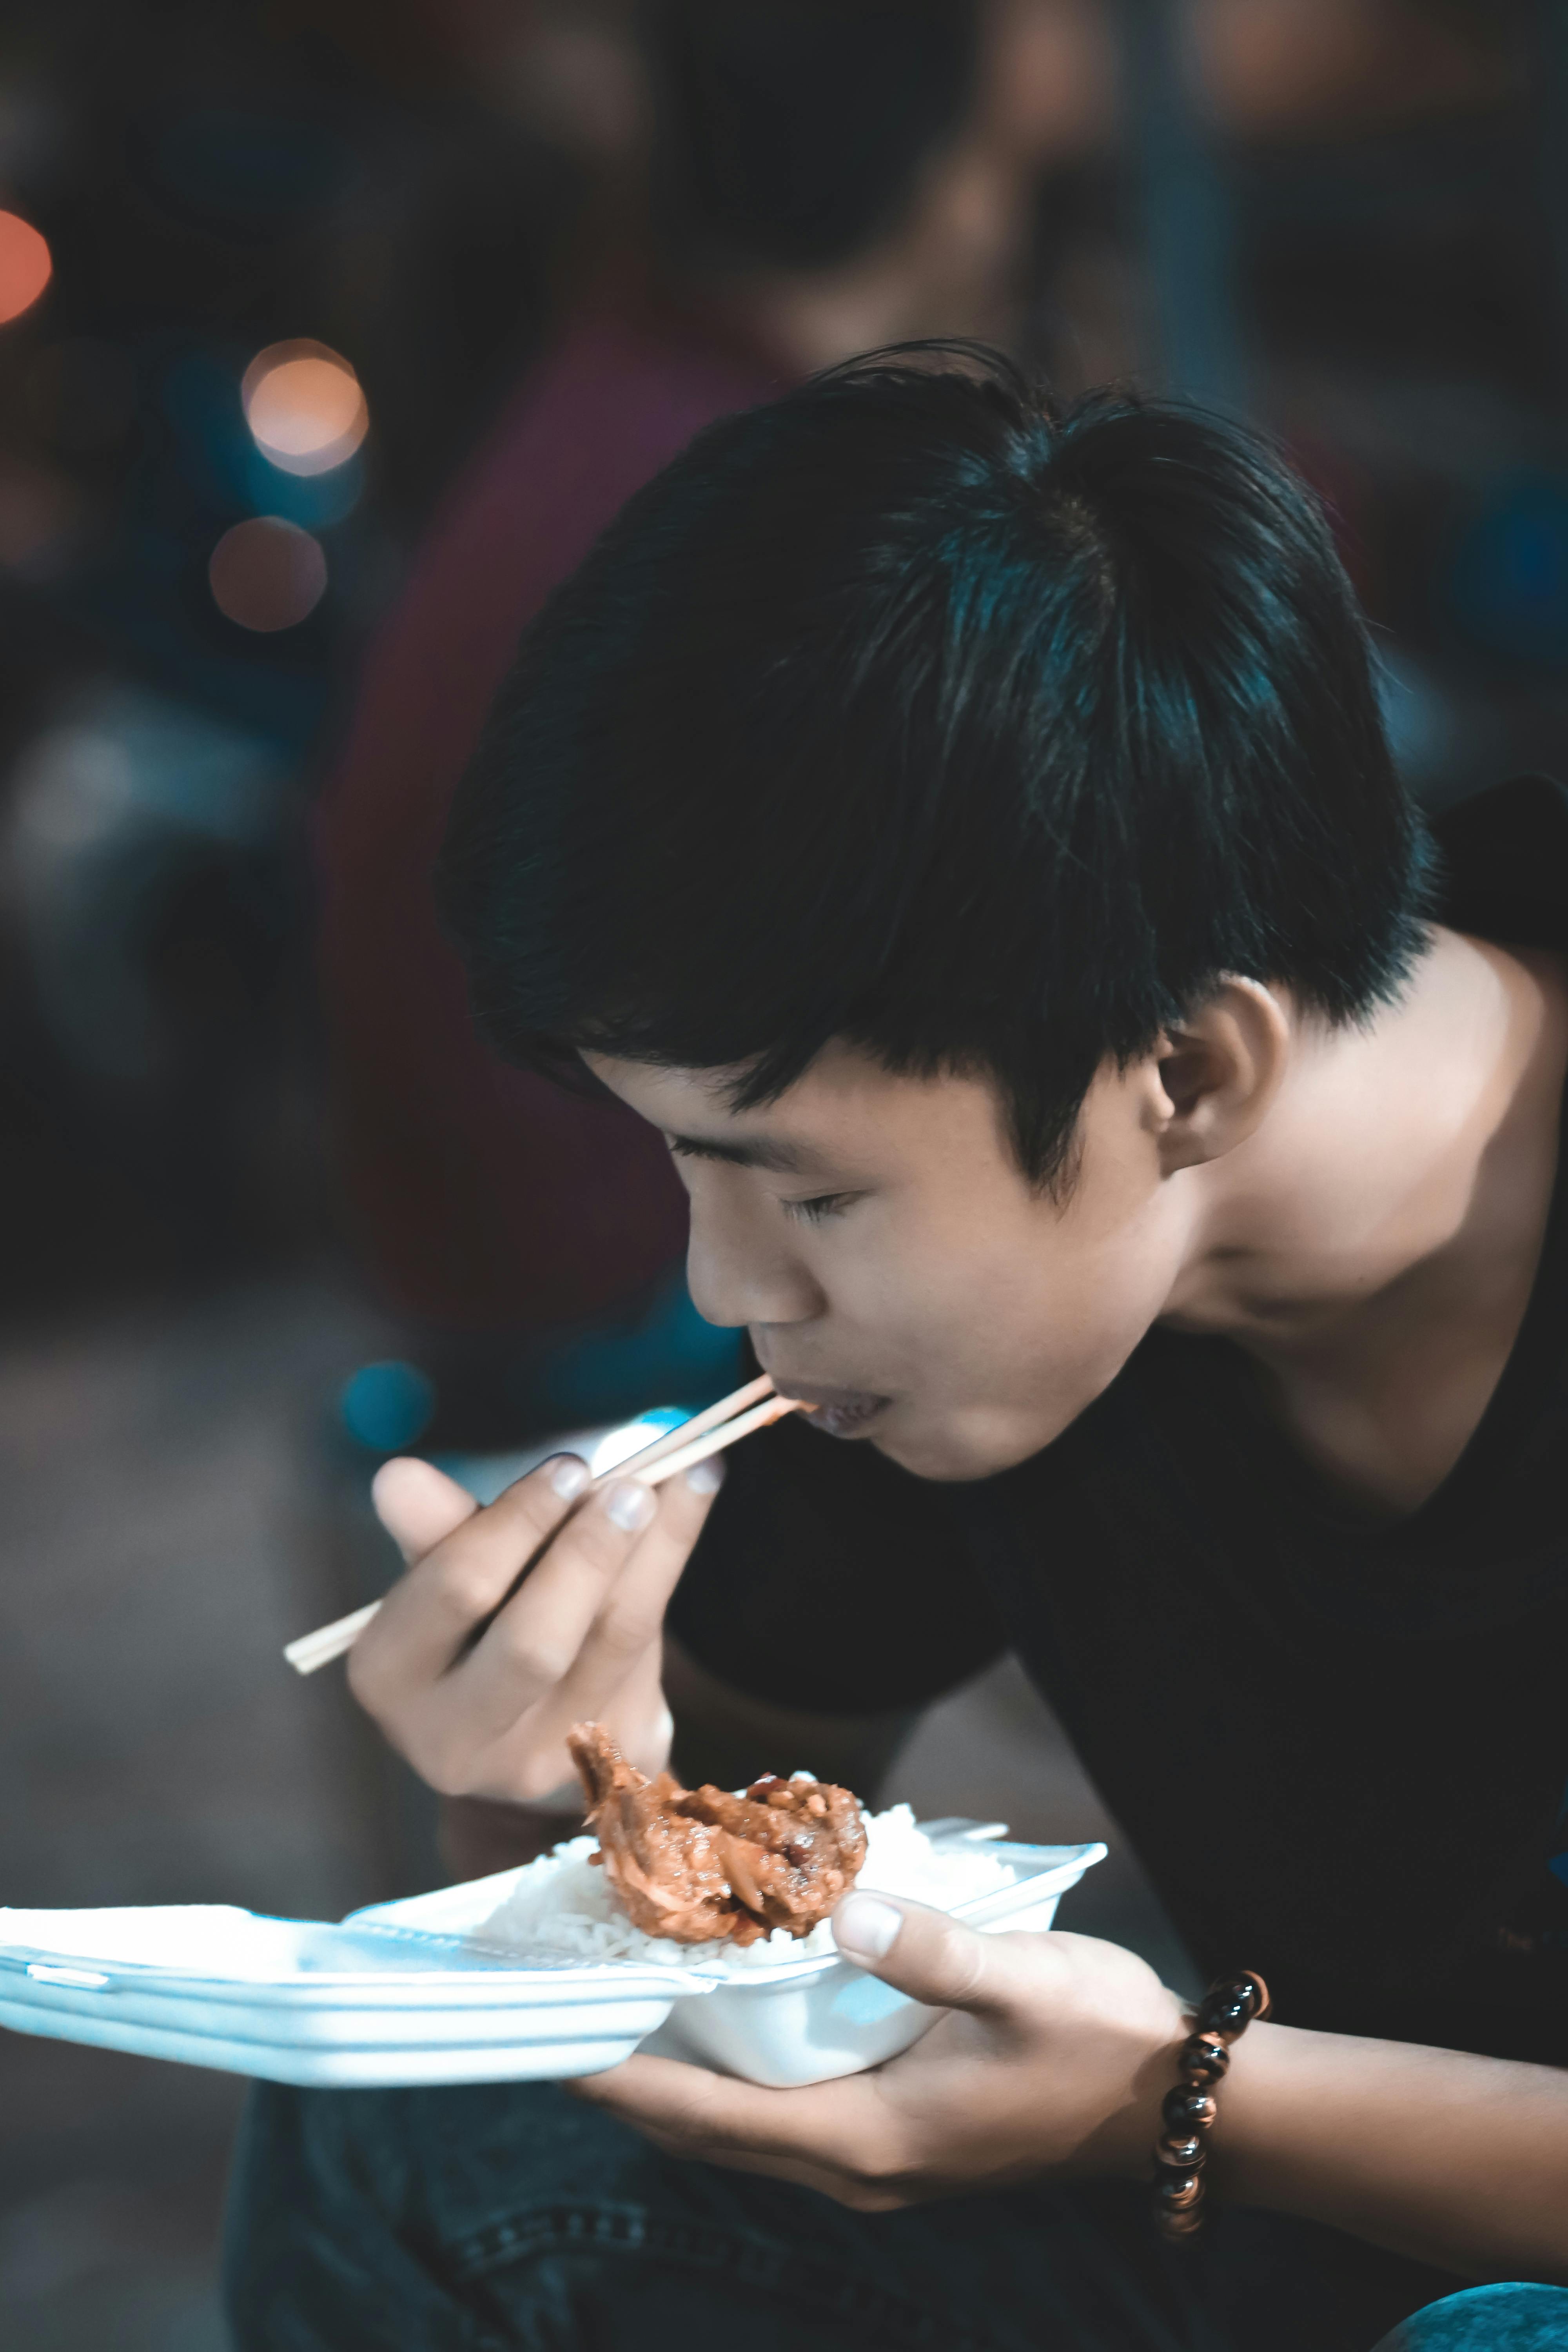 Shallow Focus Photo of Man Eating · Free Stock Photo - 4000 x 6000 jpeg 1100kB